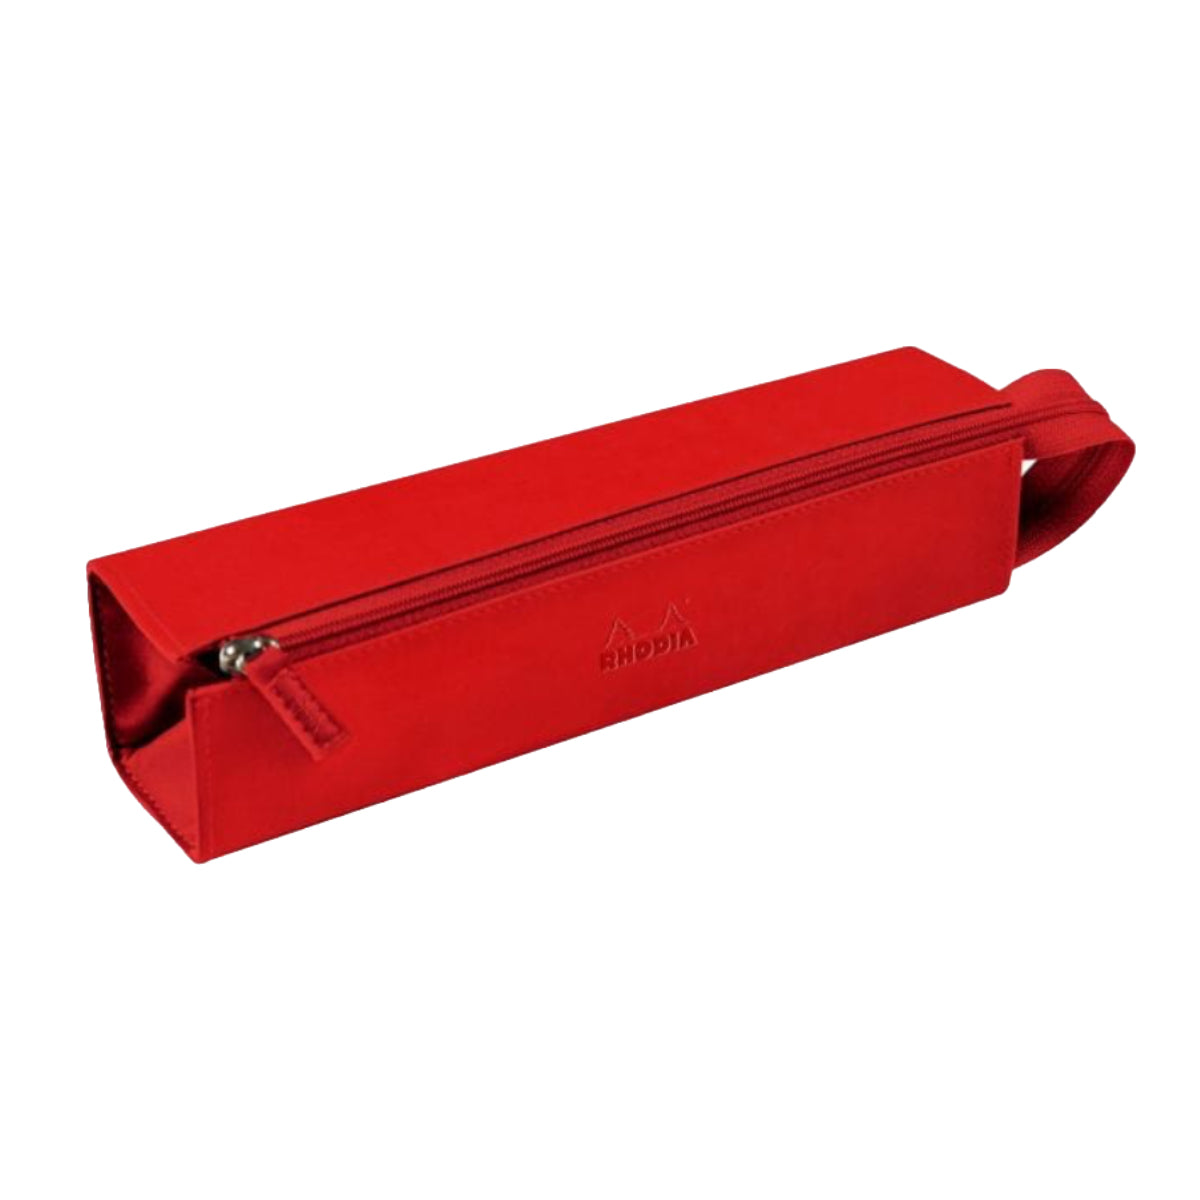 RHODIA rhodiarama Square Pencil Case with Zipper, PU Leather, 230 x 50 mm, Red